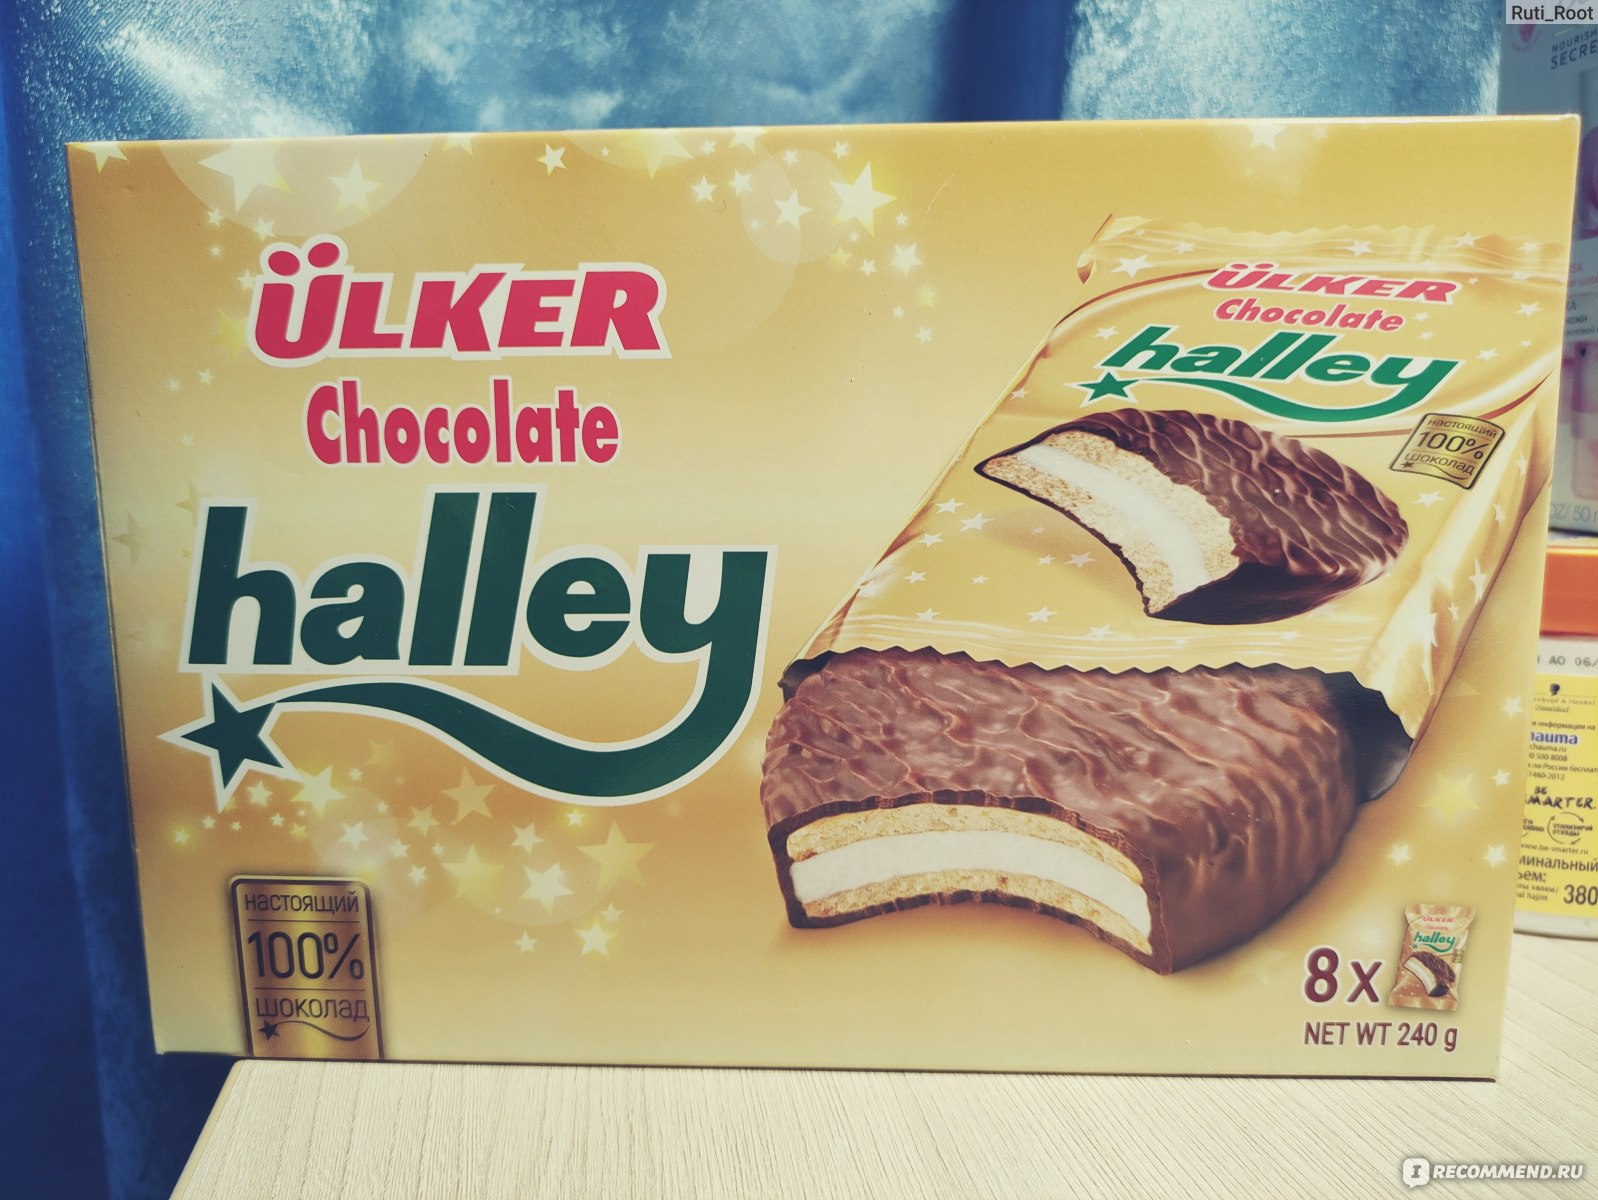 Ulker Chocolate Halley